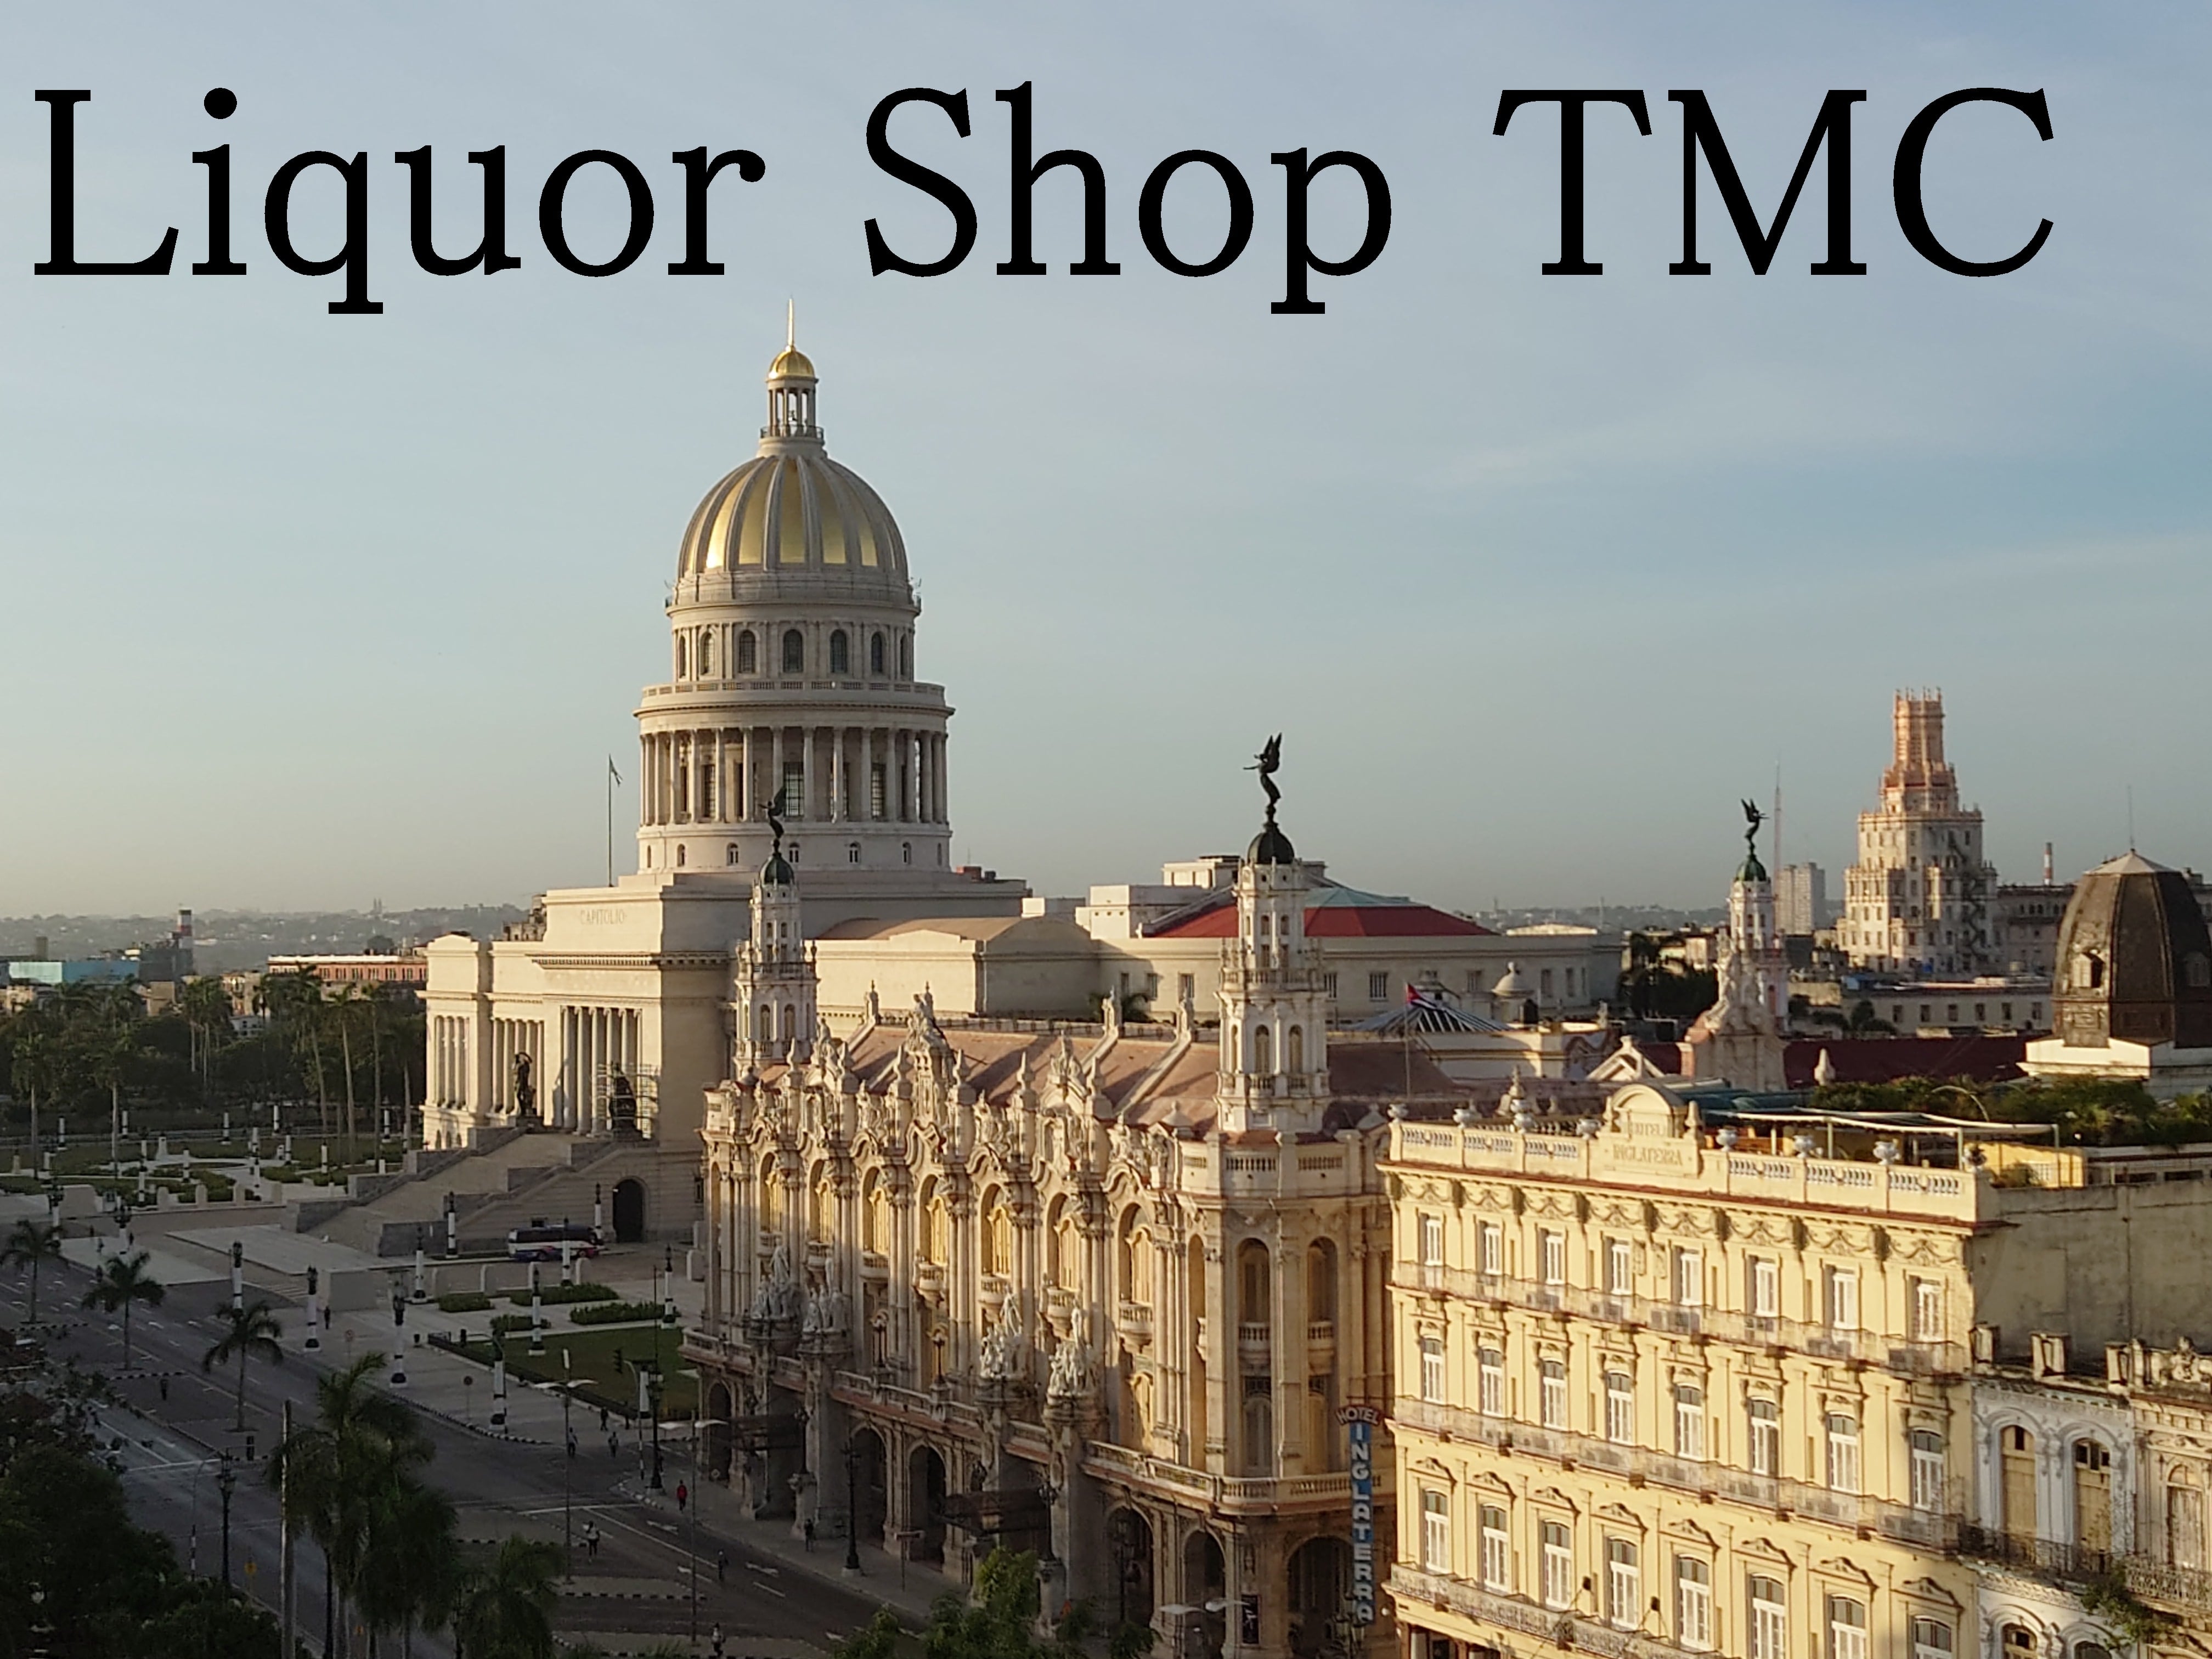 Liquor Shop TMC